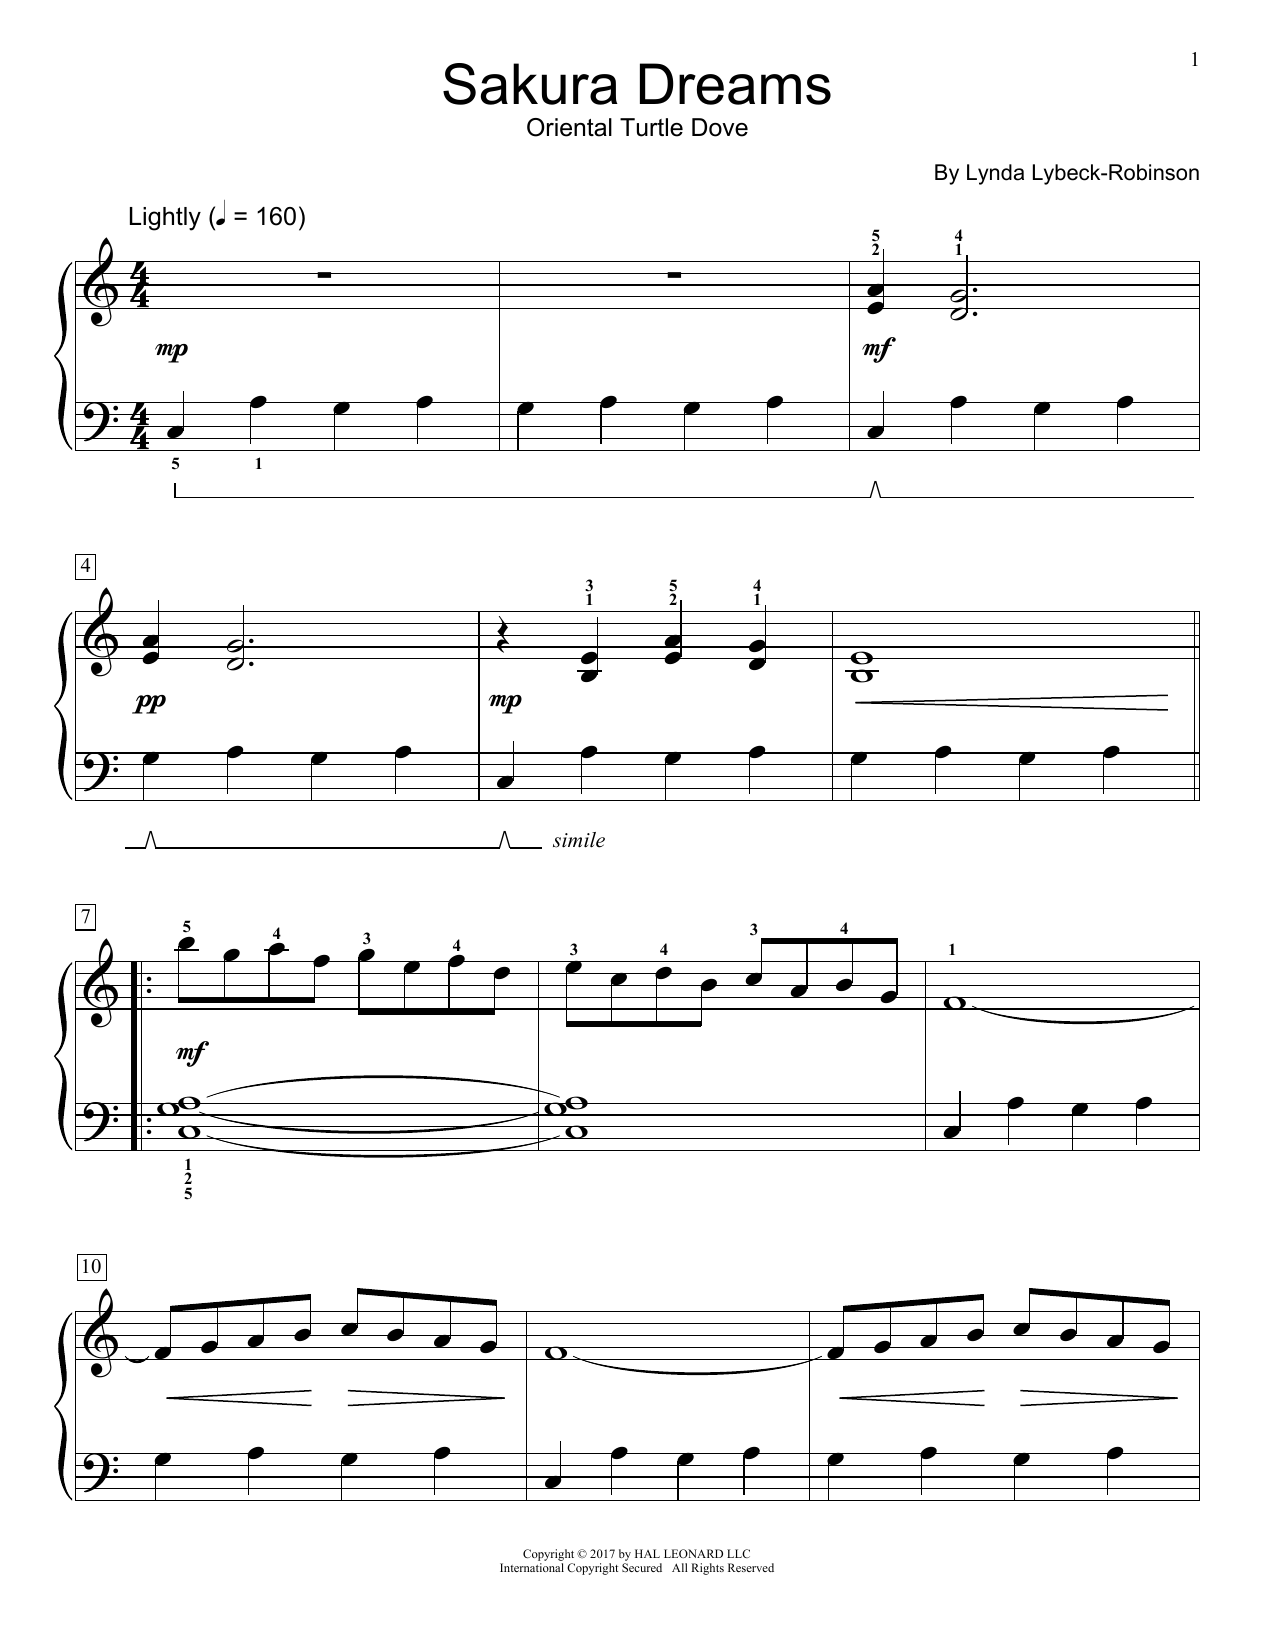 Download Lynda Lybeck-Robinson Sakura Dreams Sheet Music and learn how to play Educational Piano PDF digital score in minutes